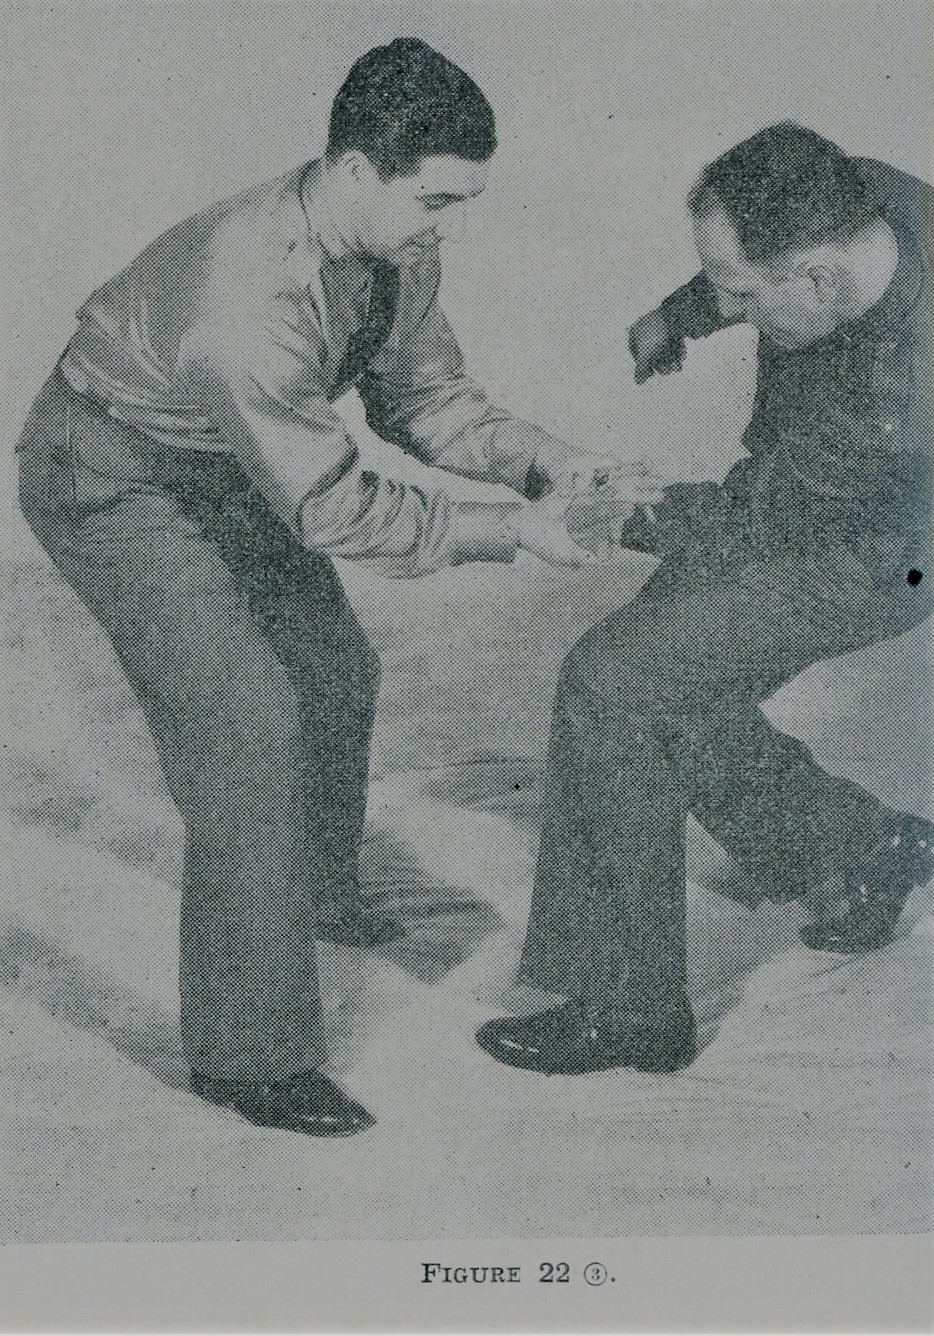 Taking opponent's hand backward during self defense.